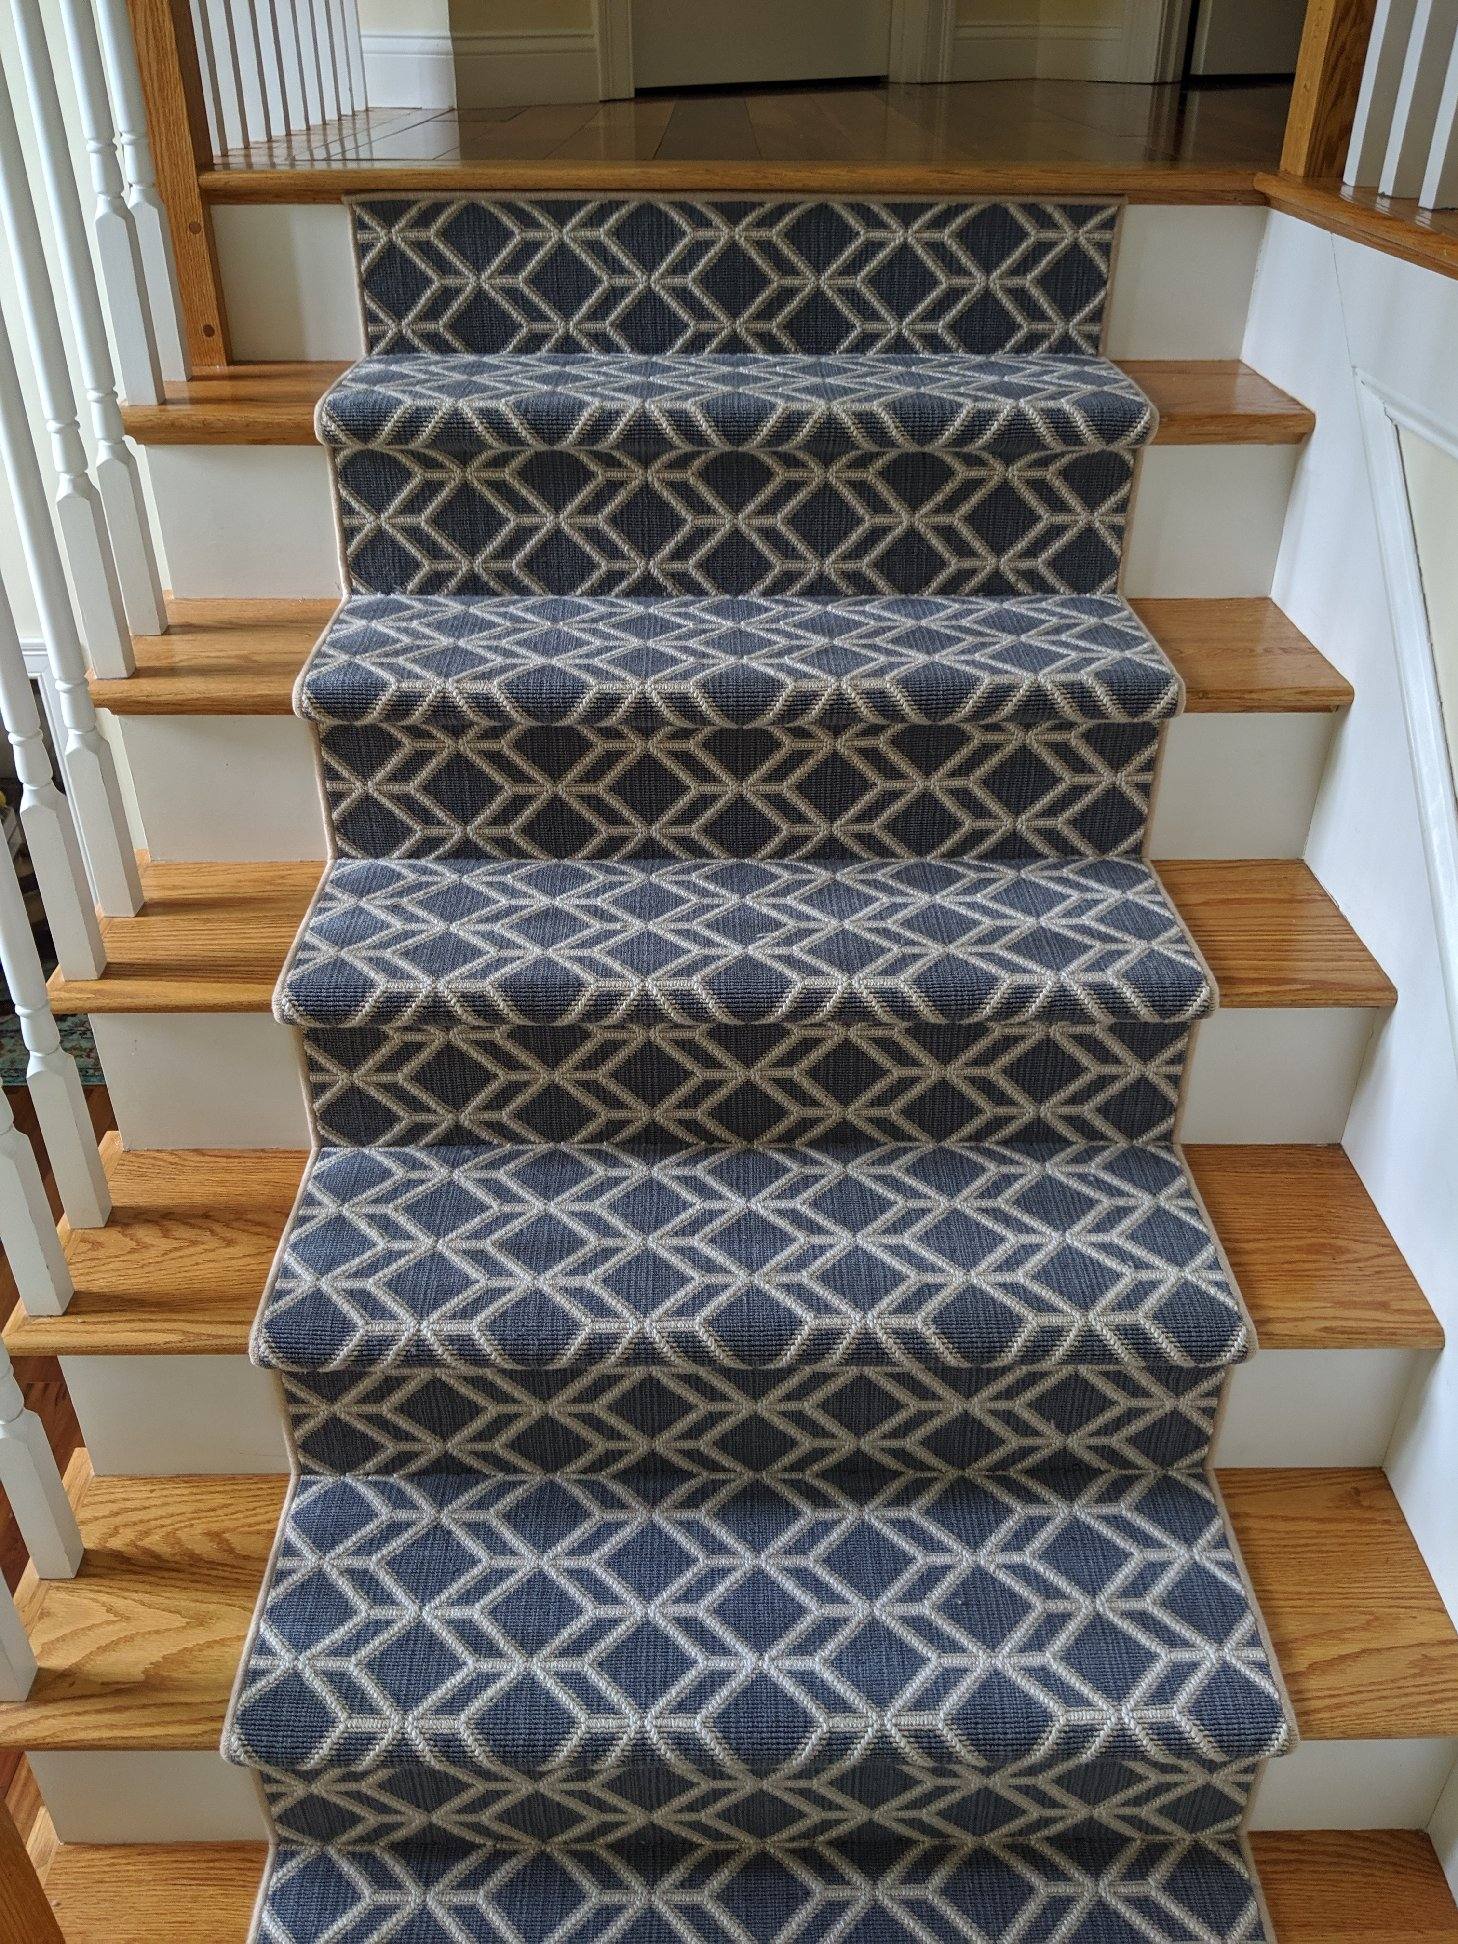 Carpet Installation Pad for Steps - Stair Runner Store